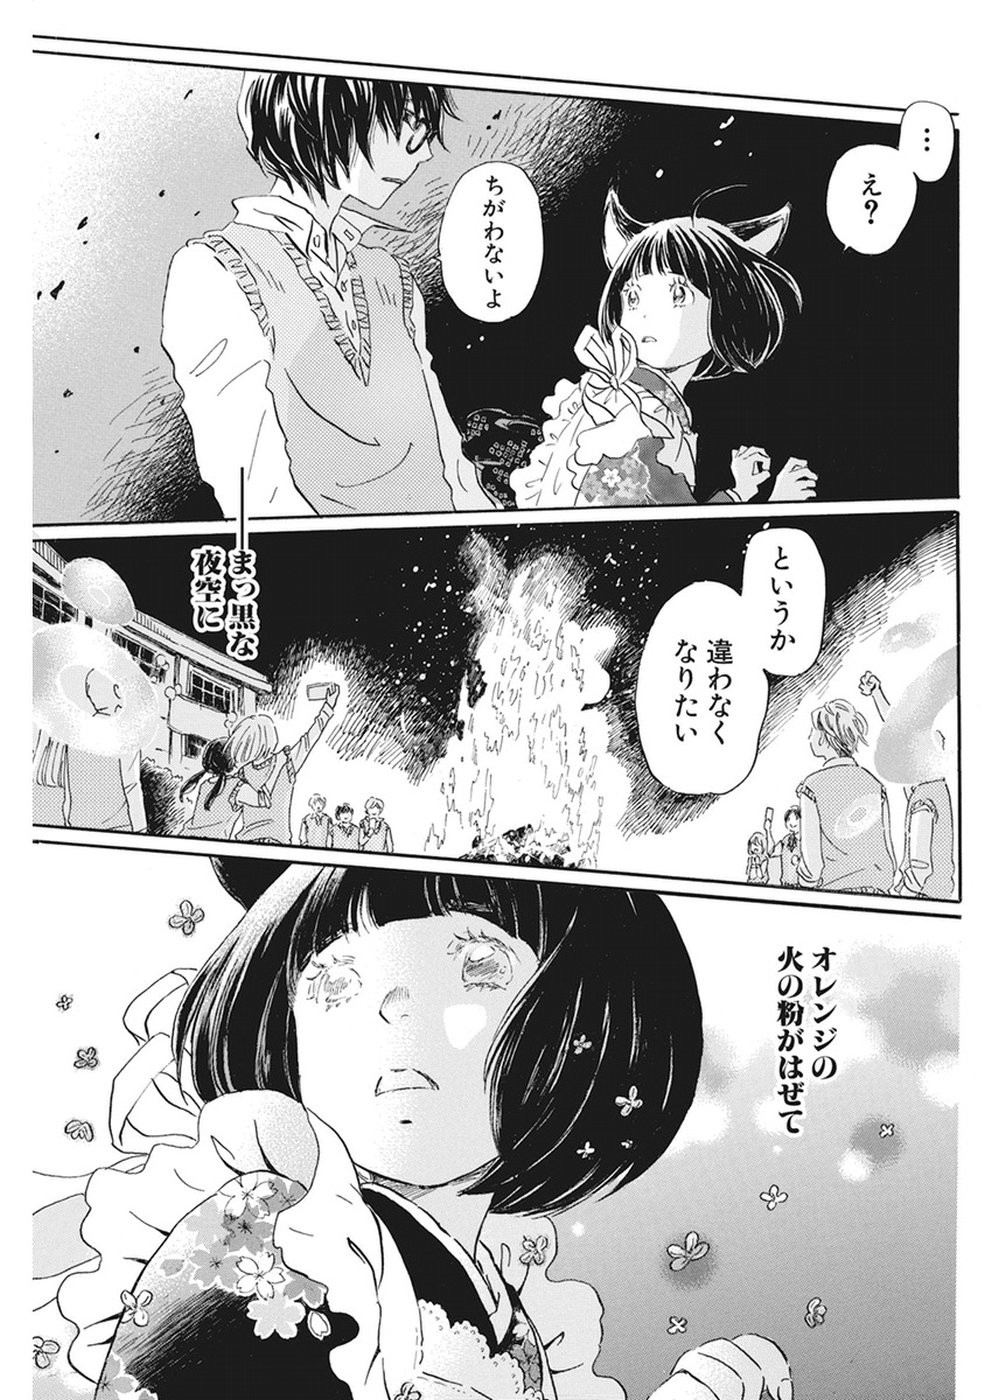 3 Gatsu no Lion - Chapter 154 - Page 8